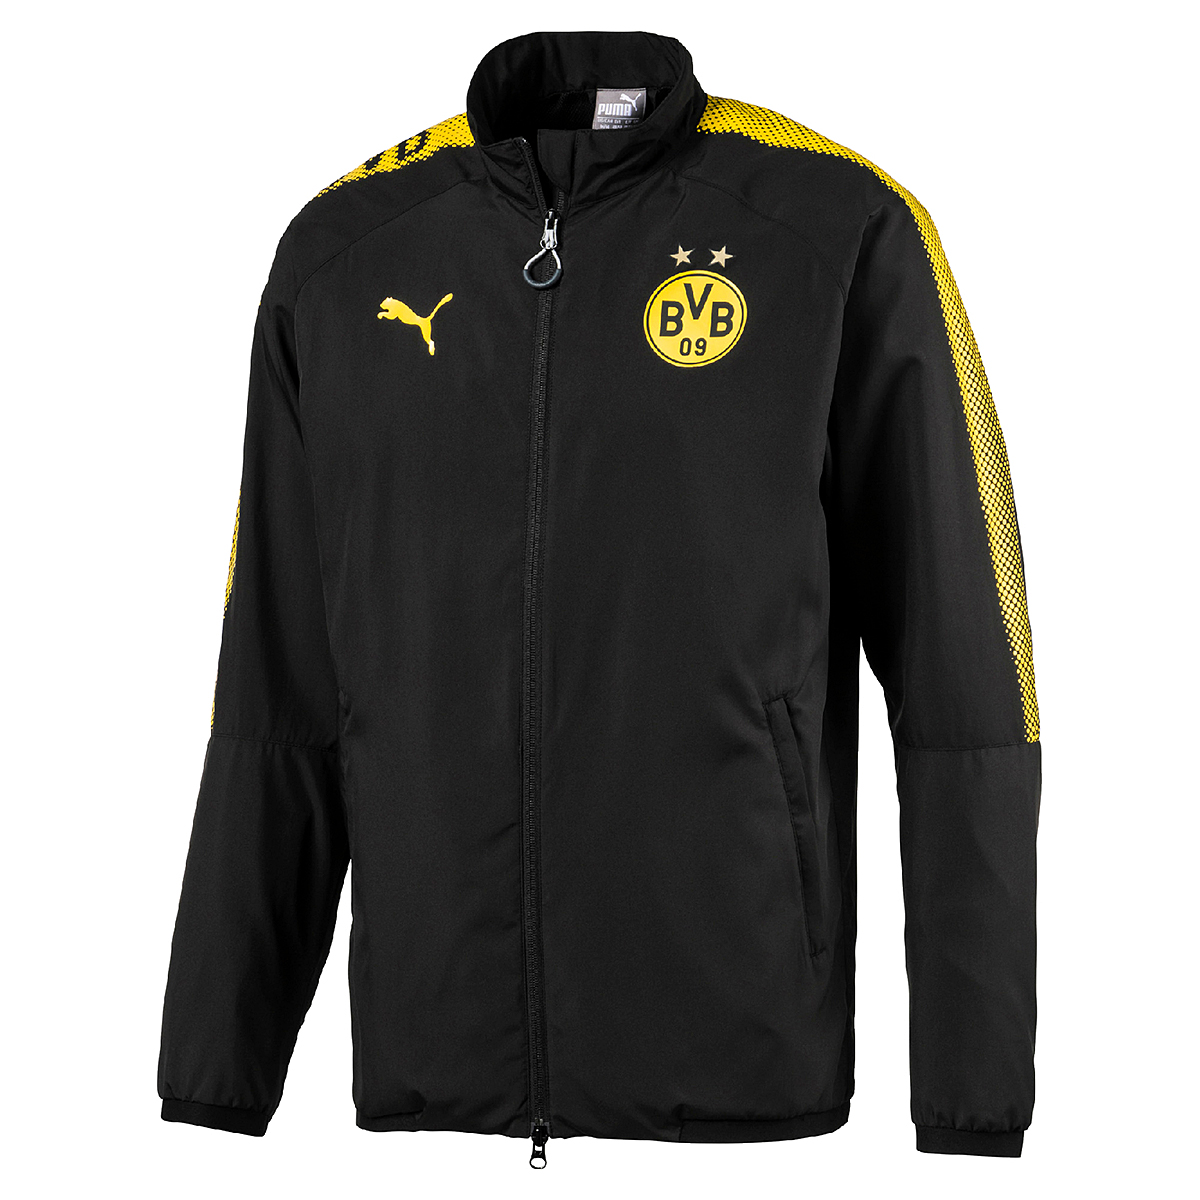 Puma BVB Leisure Jacket without Sponsor Jacke Borussia Dortmund schwarz 751794 02